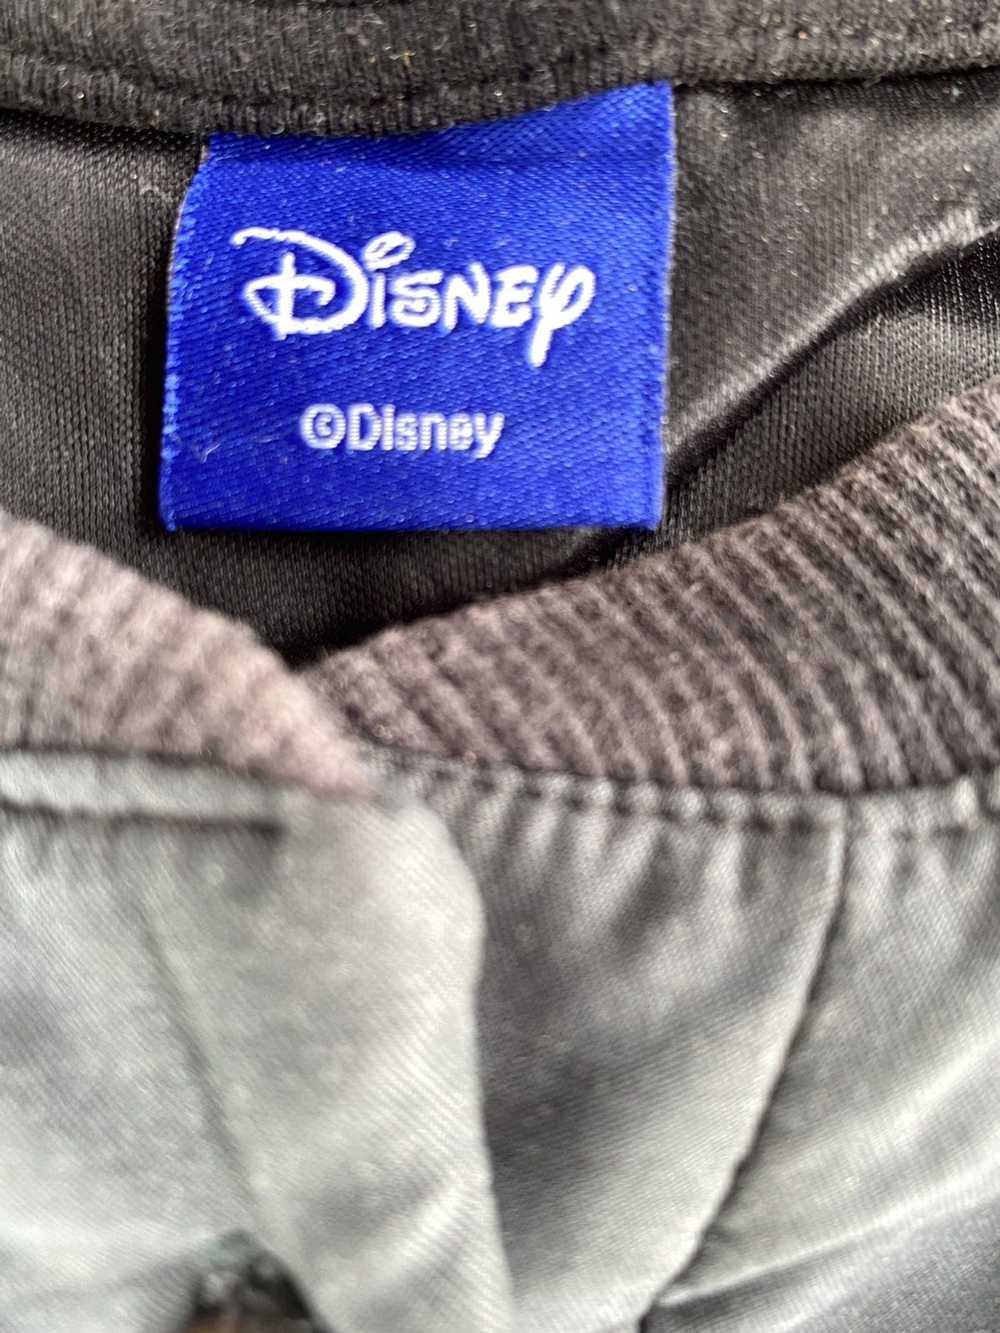 Mickey Mouse Mickey Mouse jacket sweatshirt - image 3